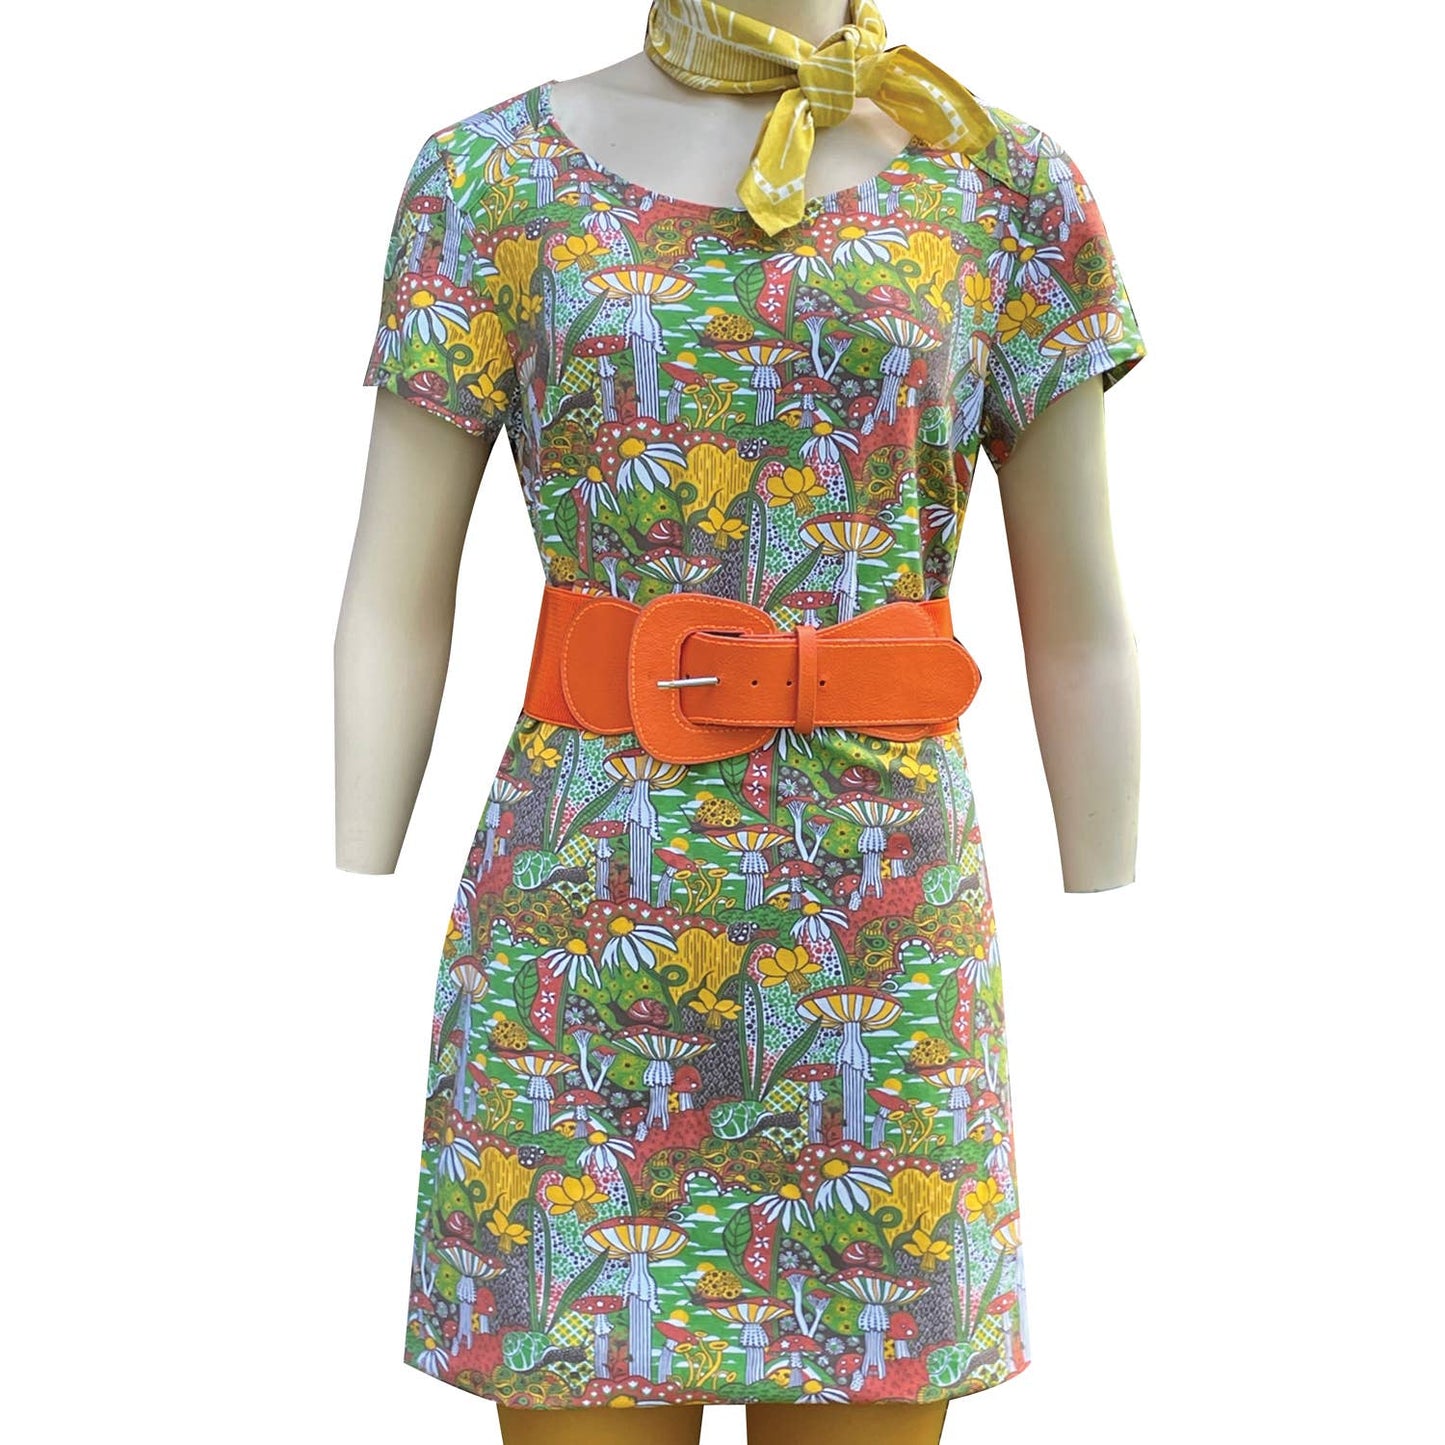 Groovy Mushroom & Snail Pocket A-Line Tunic Dress in Olive | Retro 60s-70s Inspired [L-2X]